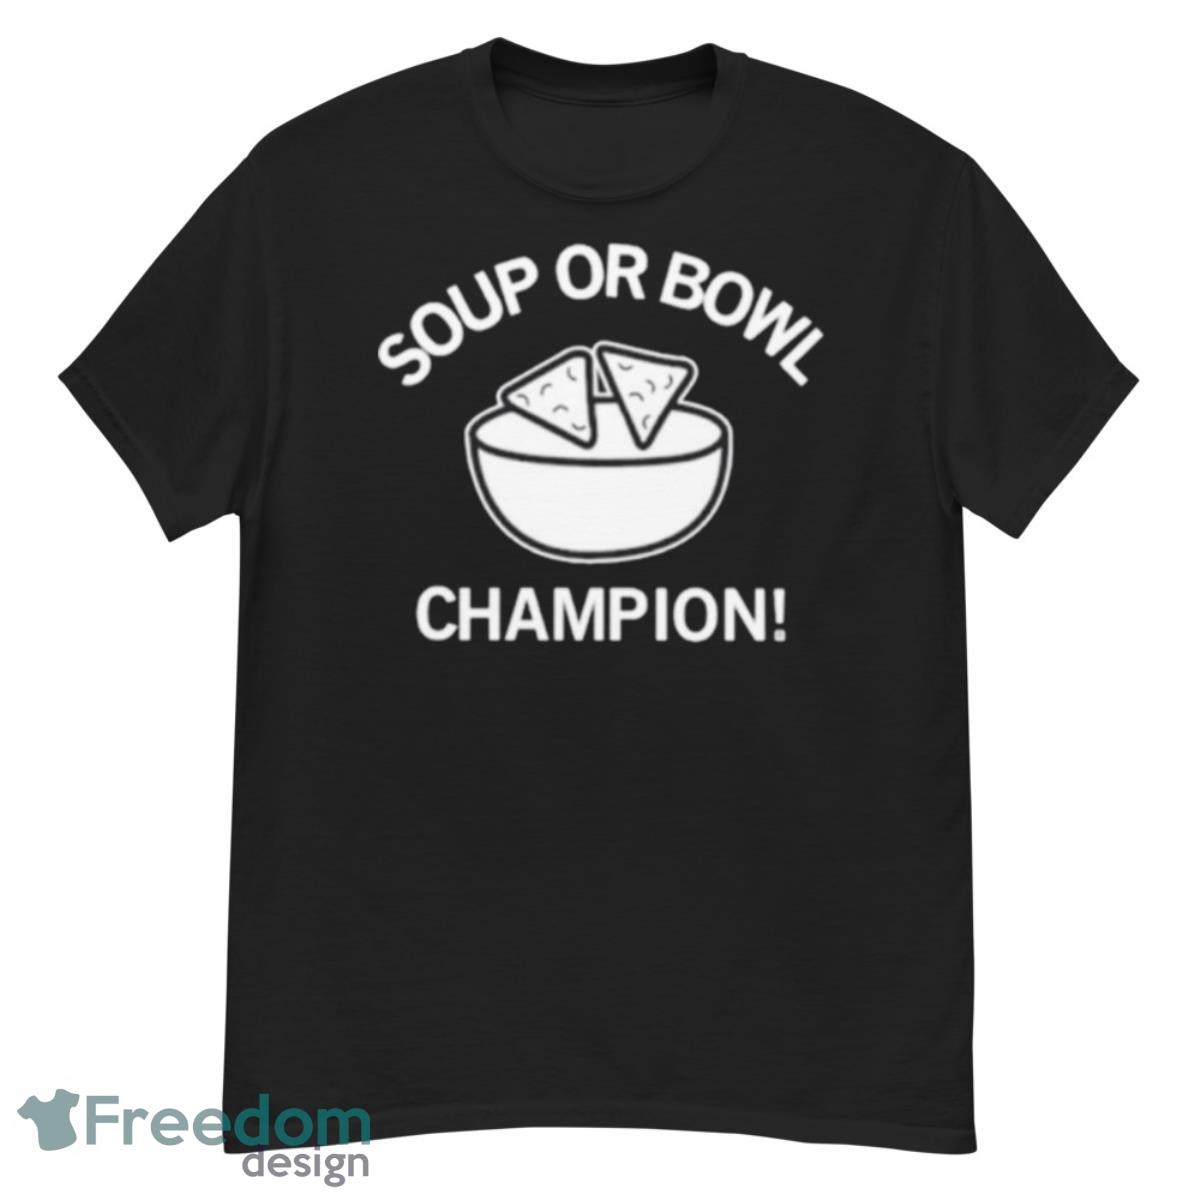 Soup or bowl Champion shirt - G500 Men’s Classic T-Shirt